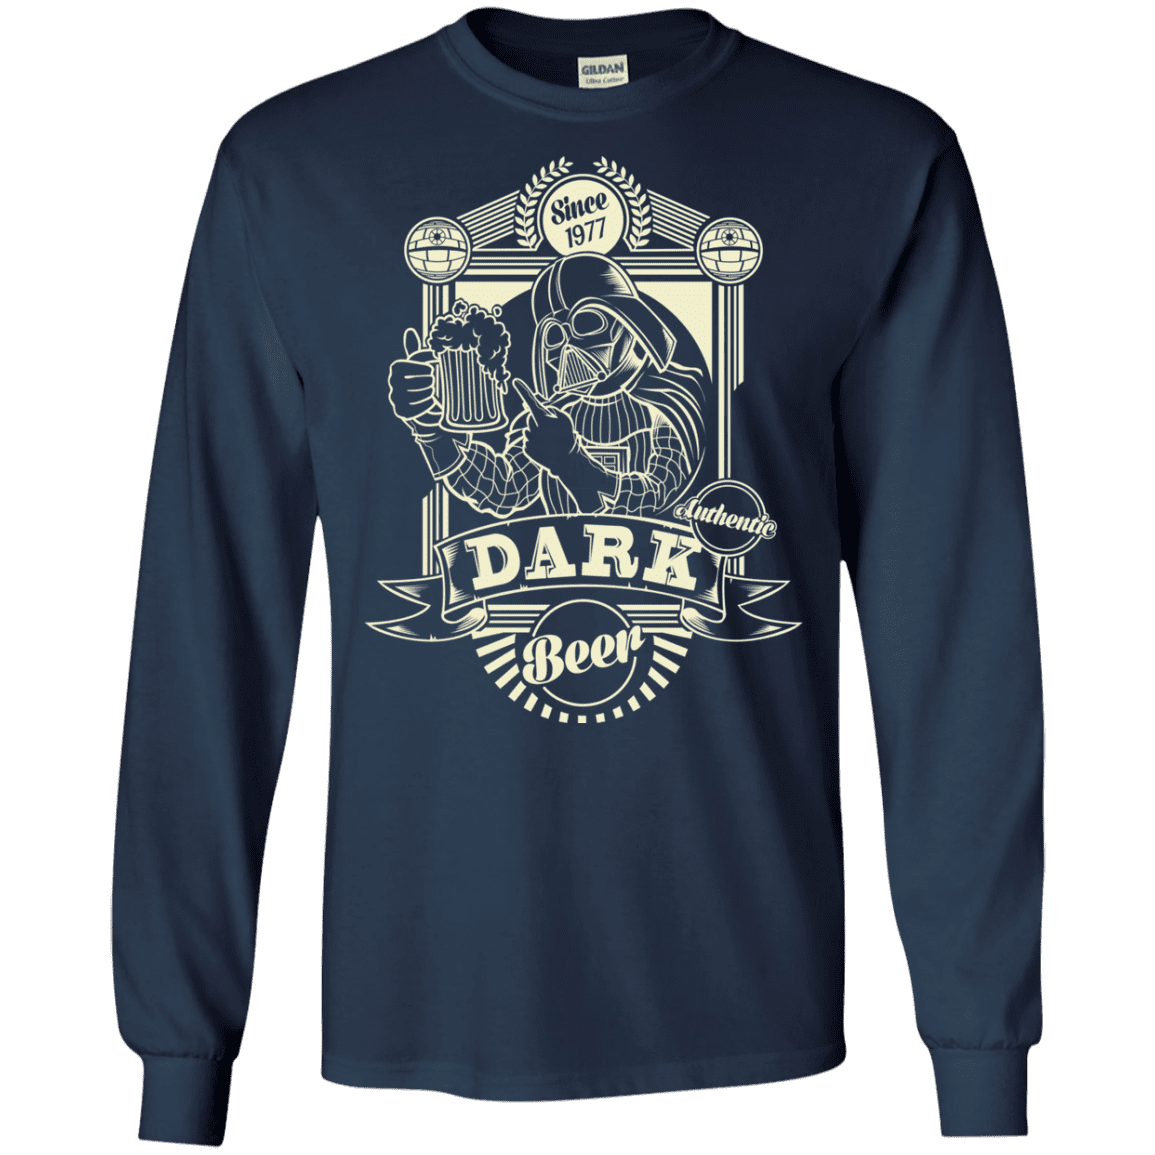 T-Shirts Navy / S Dark Beer Men's Long Sleeve T-Shirt